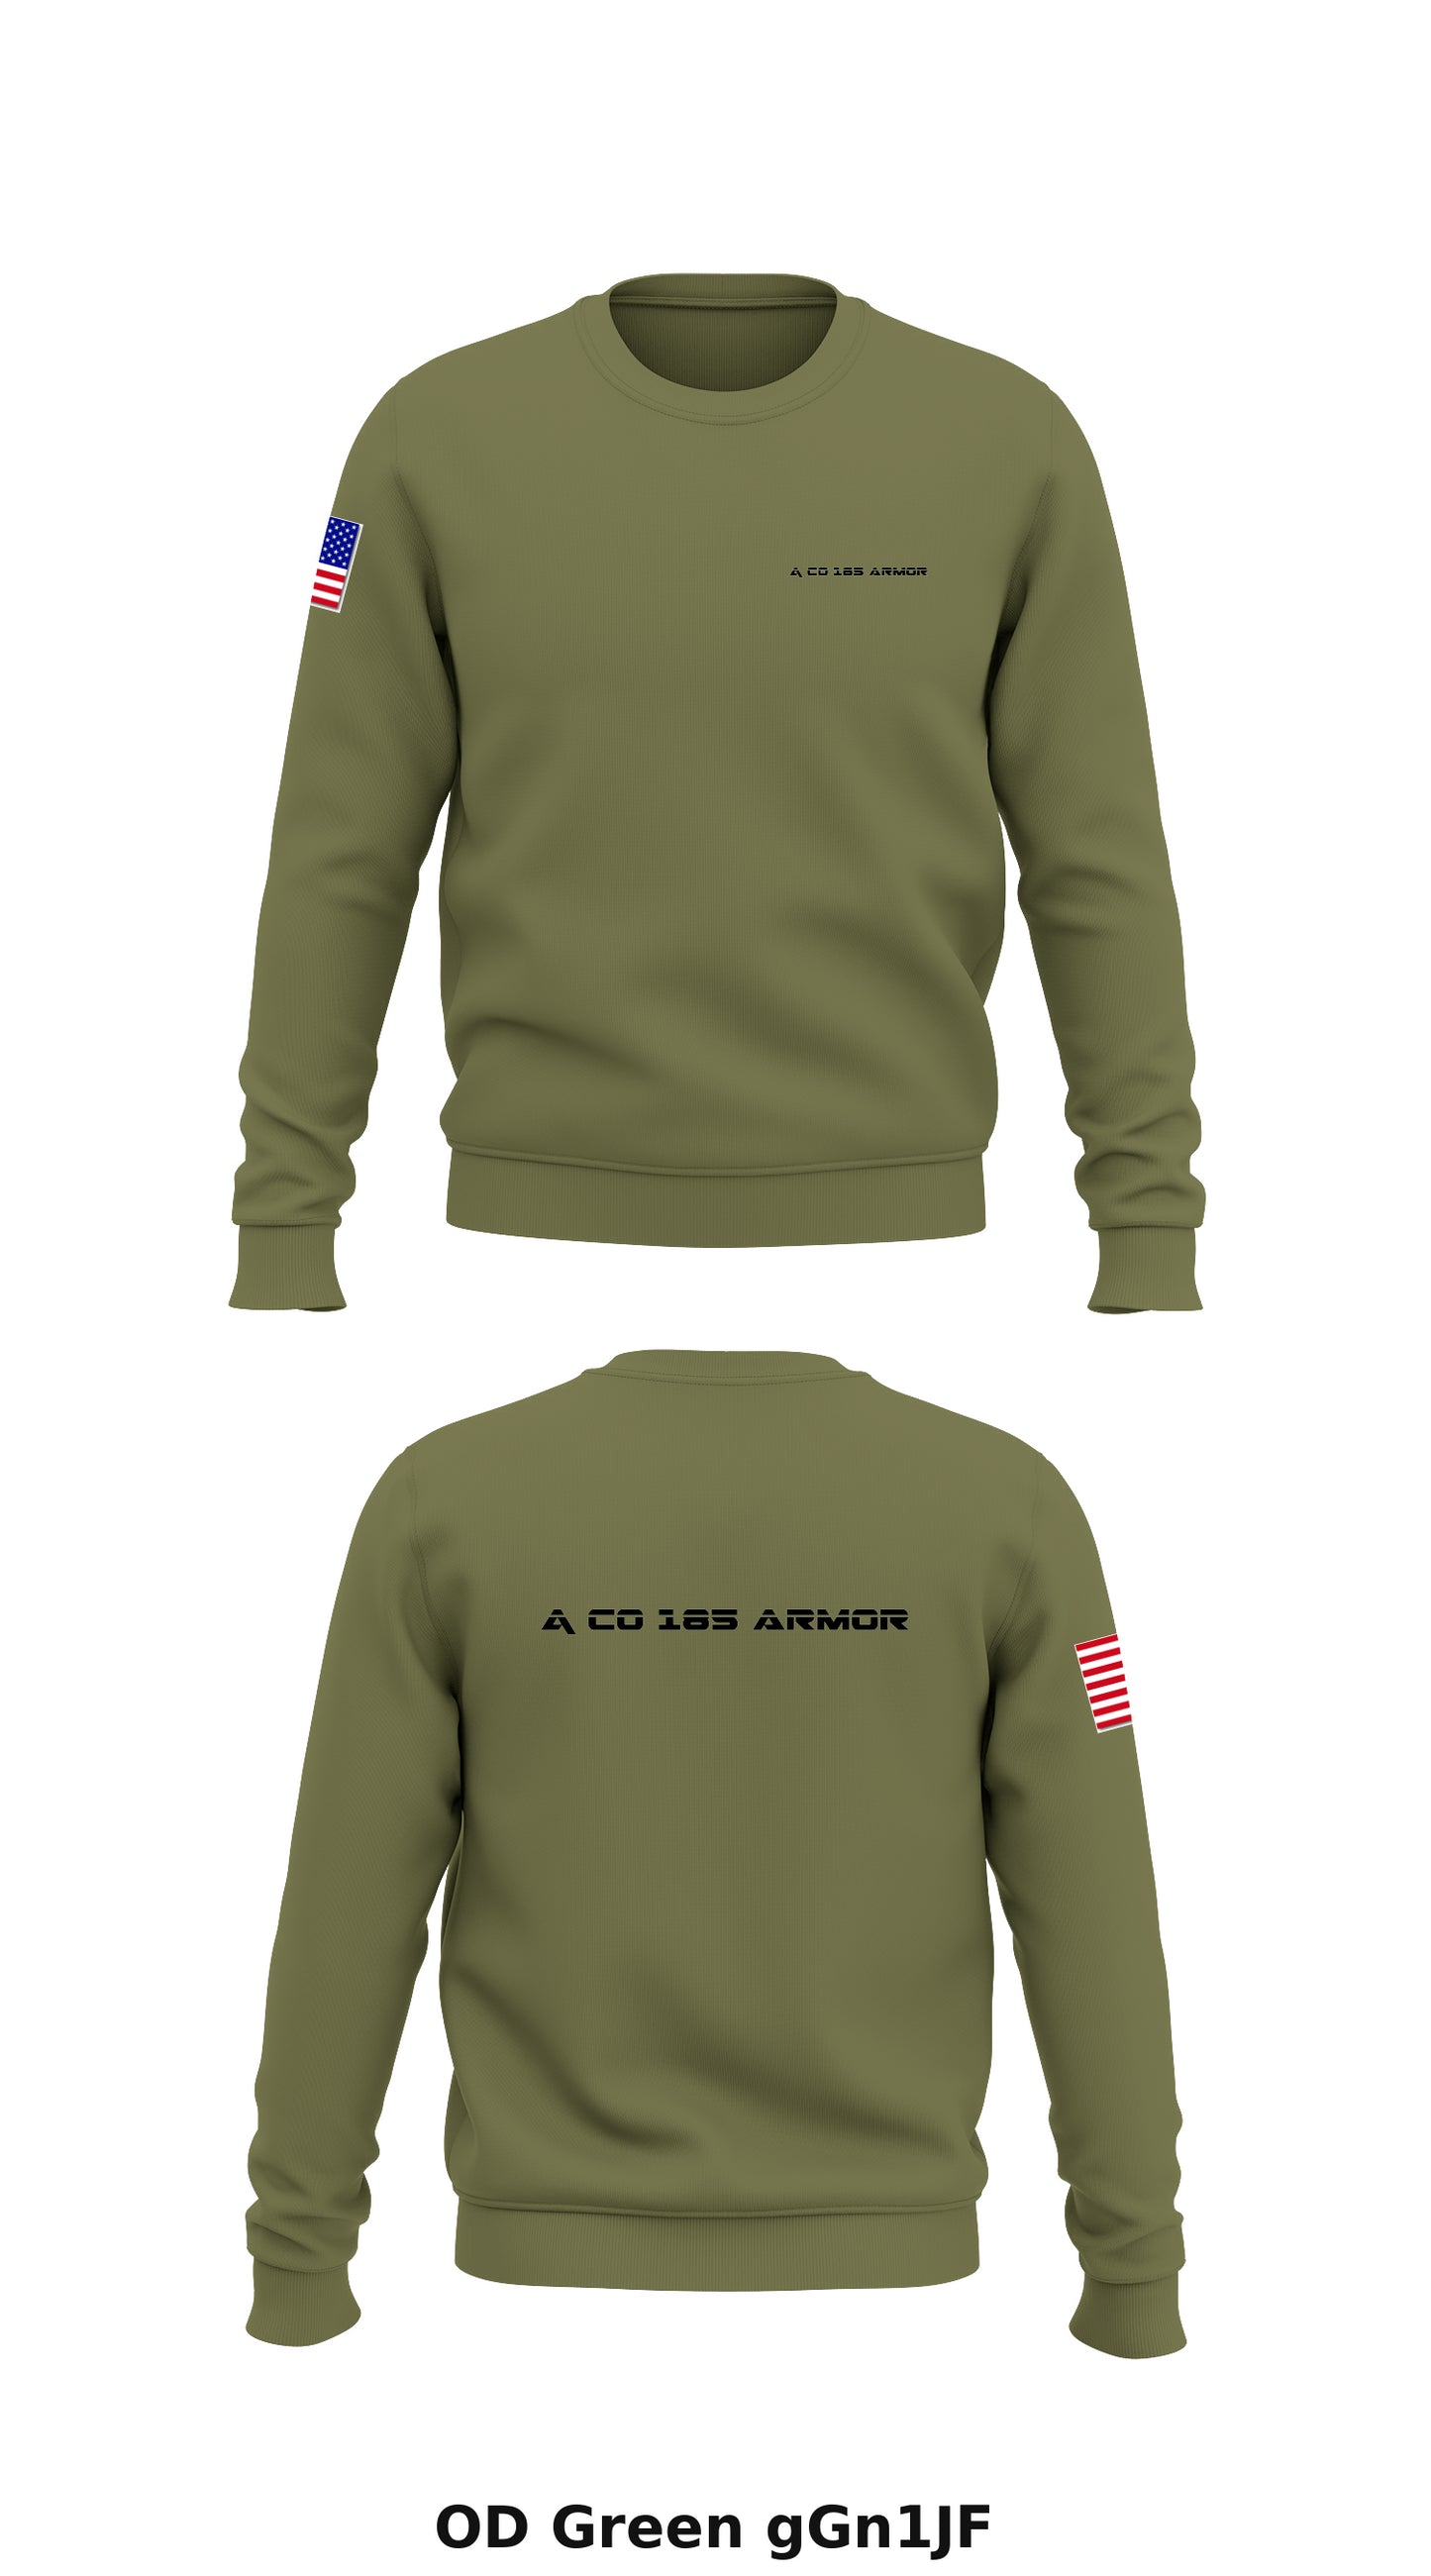 A co 185 armor Store 1 Core Men's Crewneck Performance Sweatshirt - gGn1JF